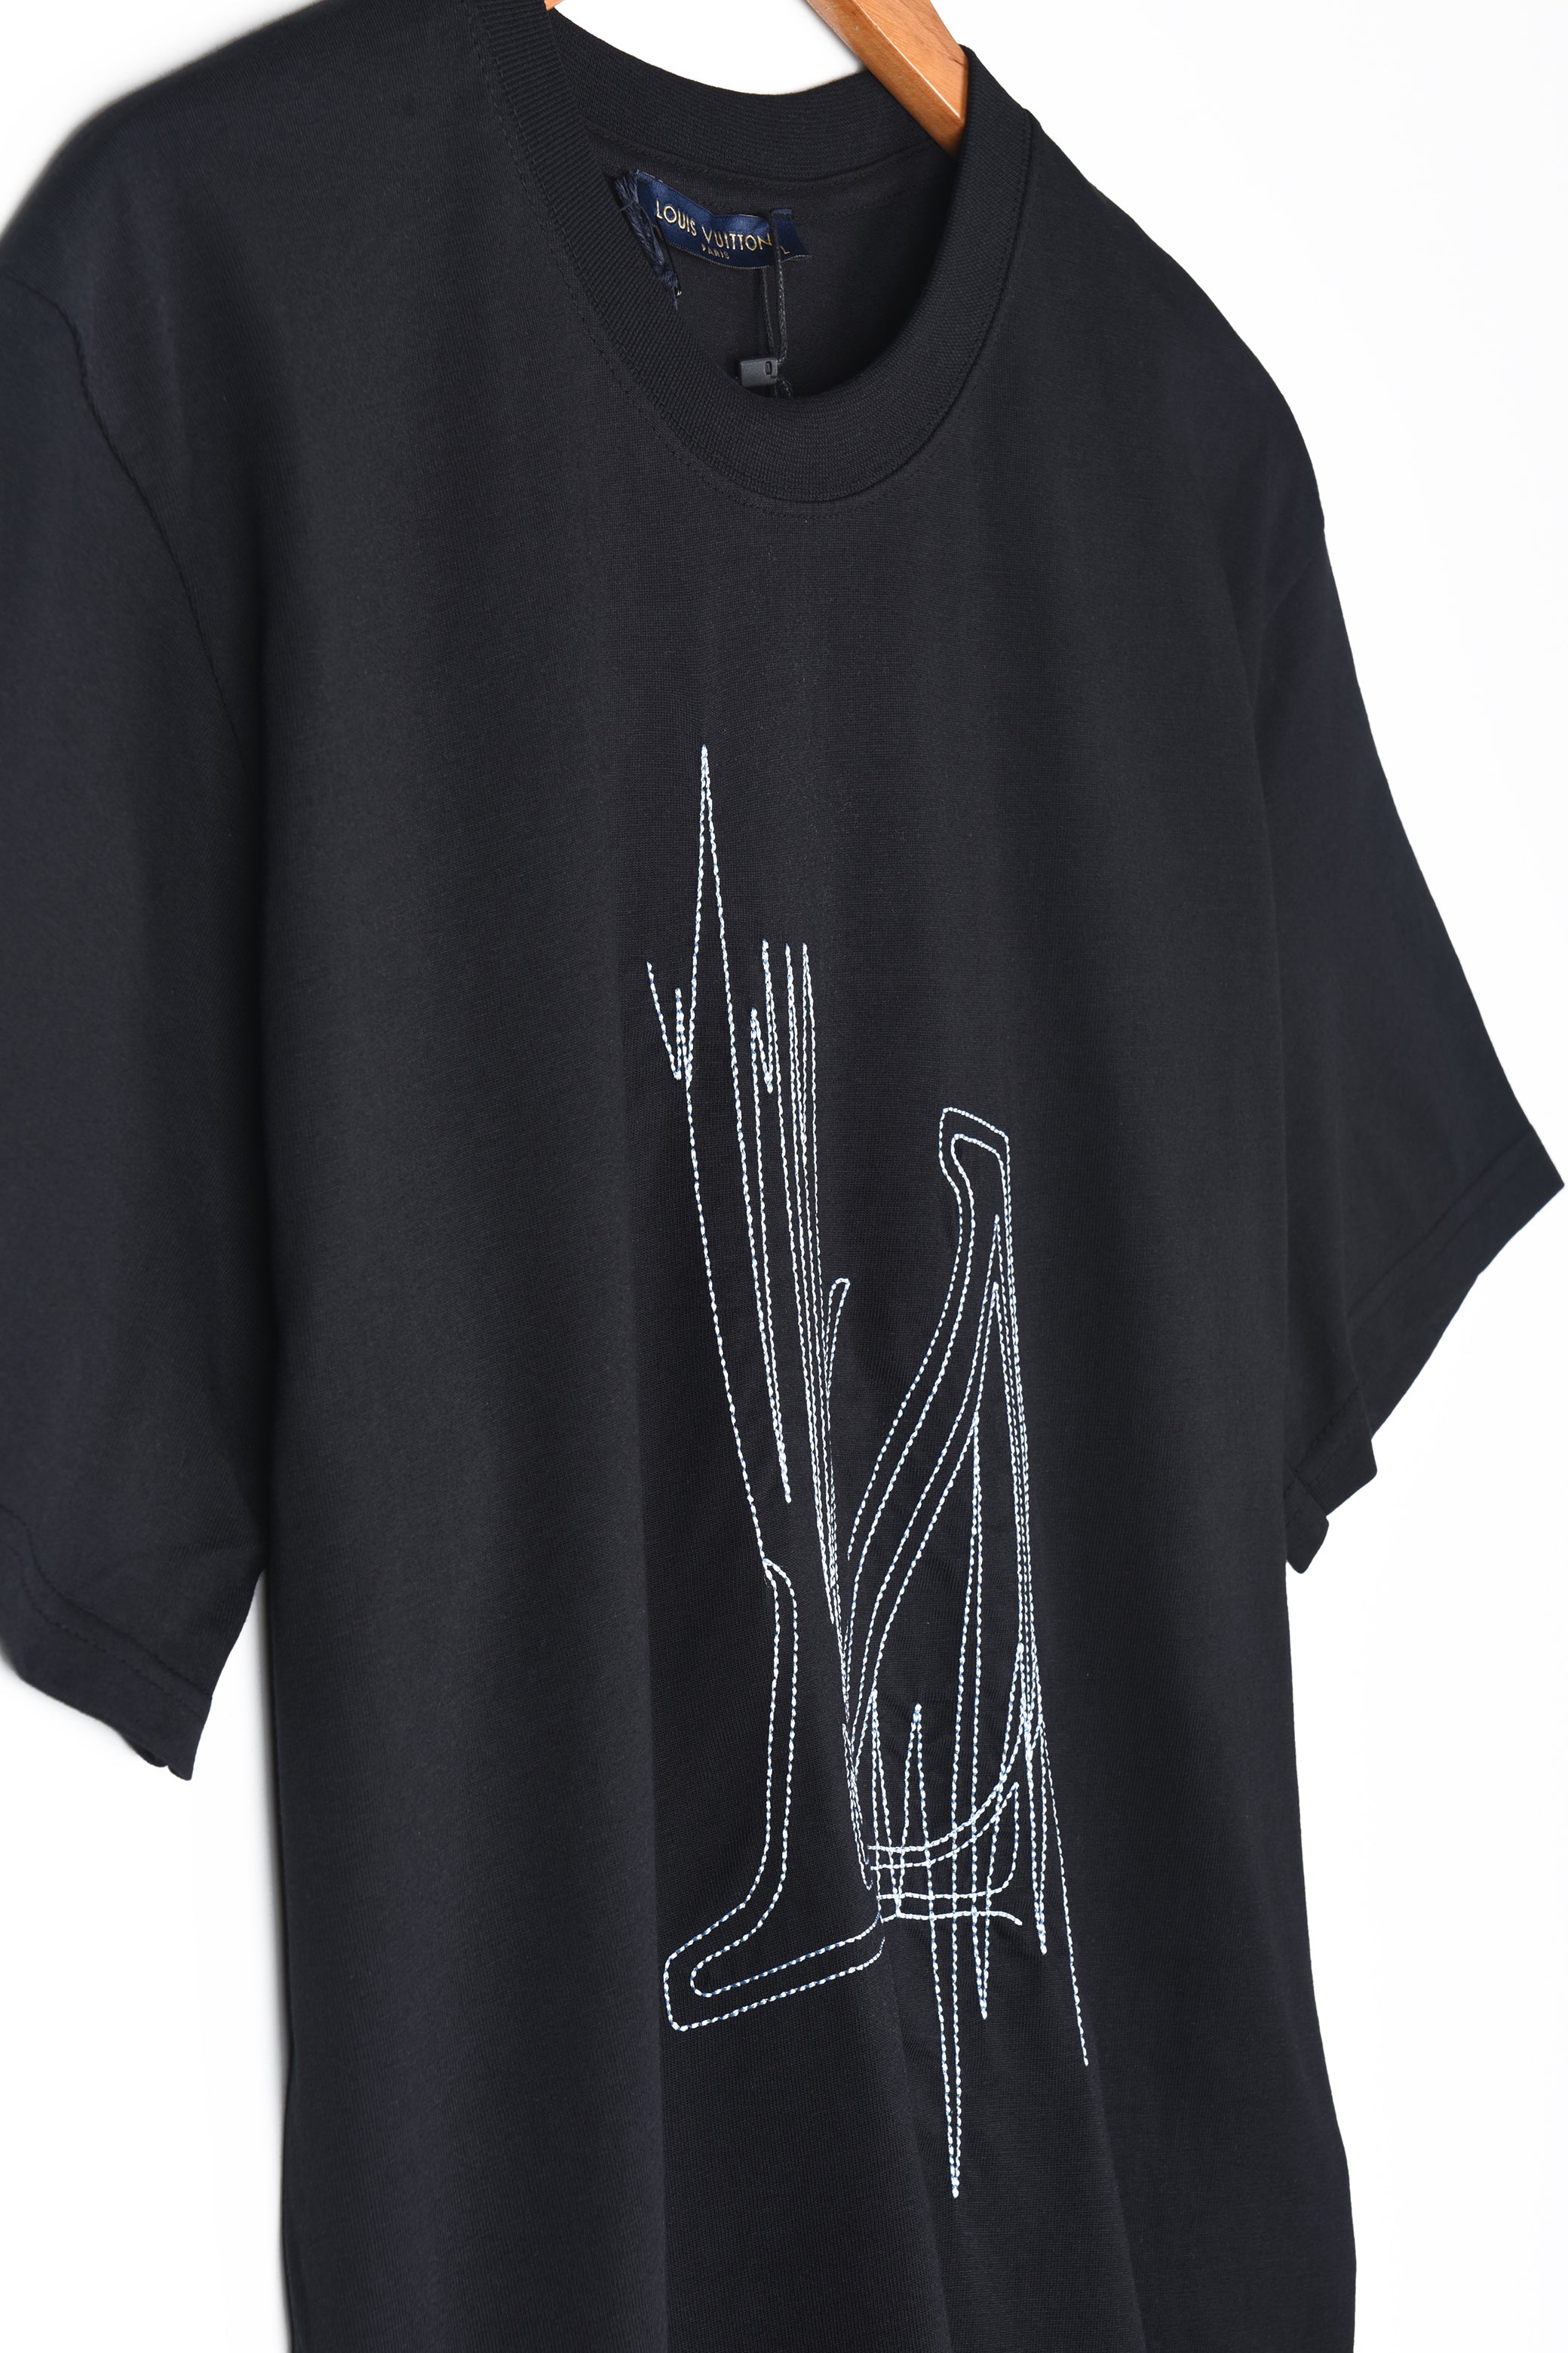 Louis Vuitton LV Frequency T-Shirt - Yeswefollow